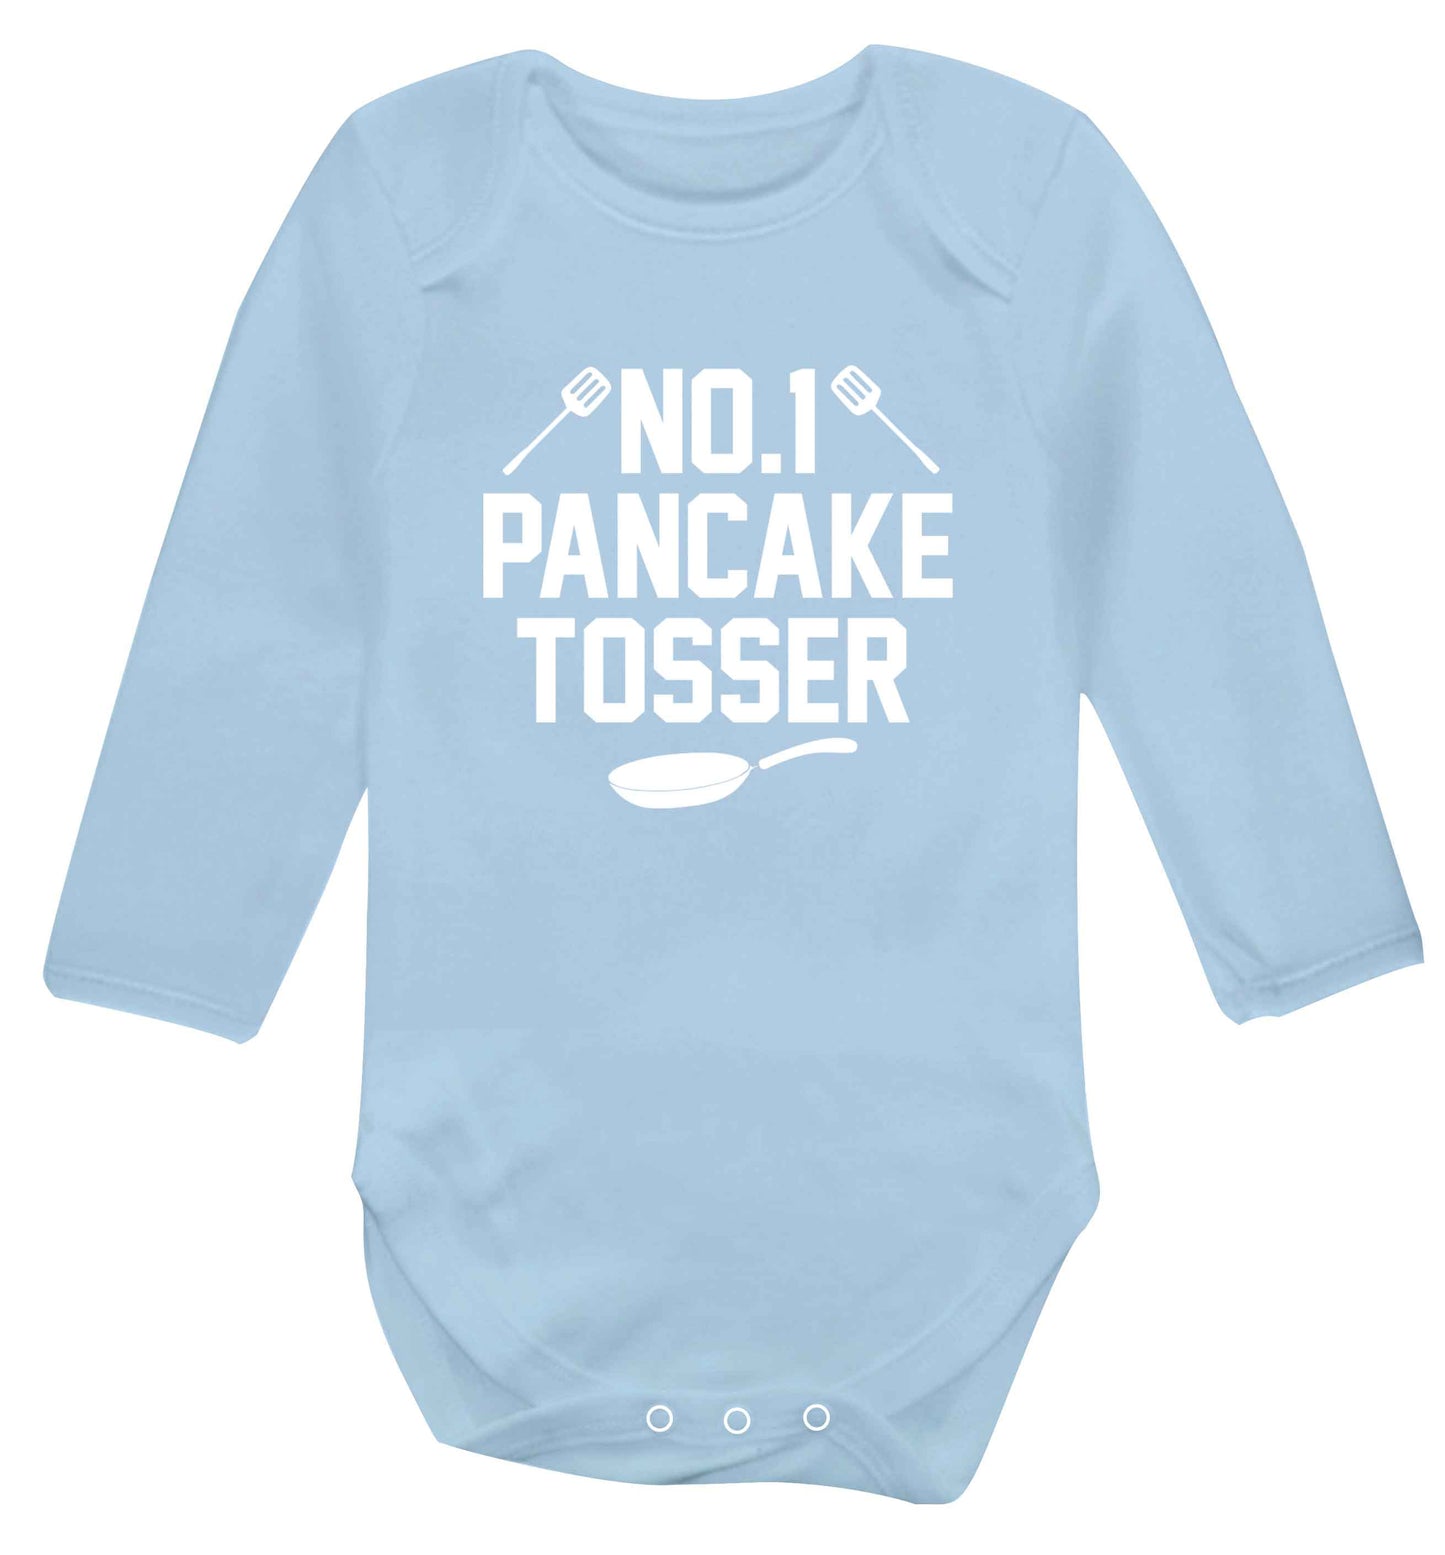 No.1 Pancake tosser baby vest long sleeved pale blue 6-12 months